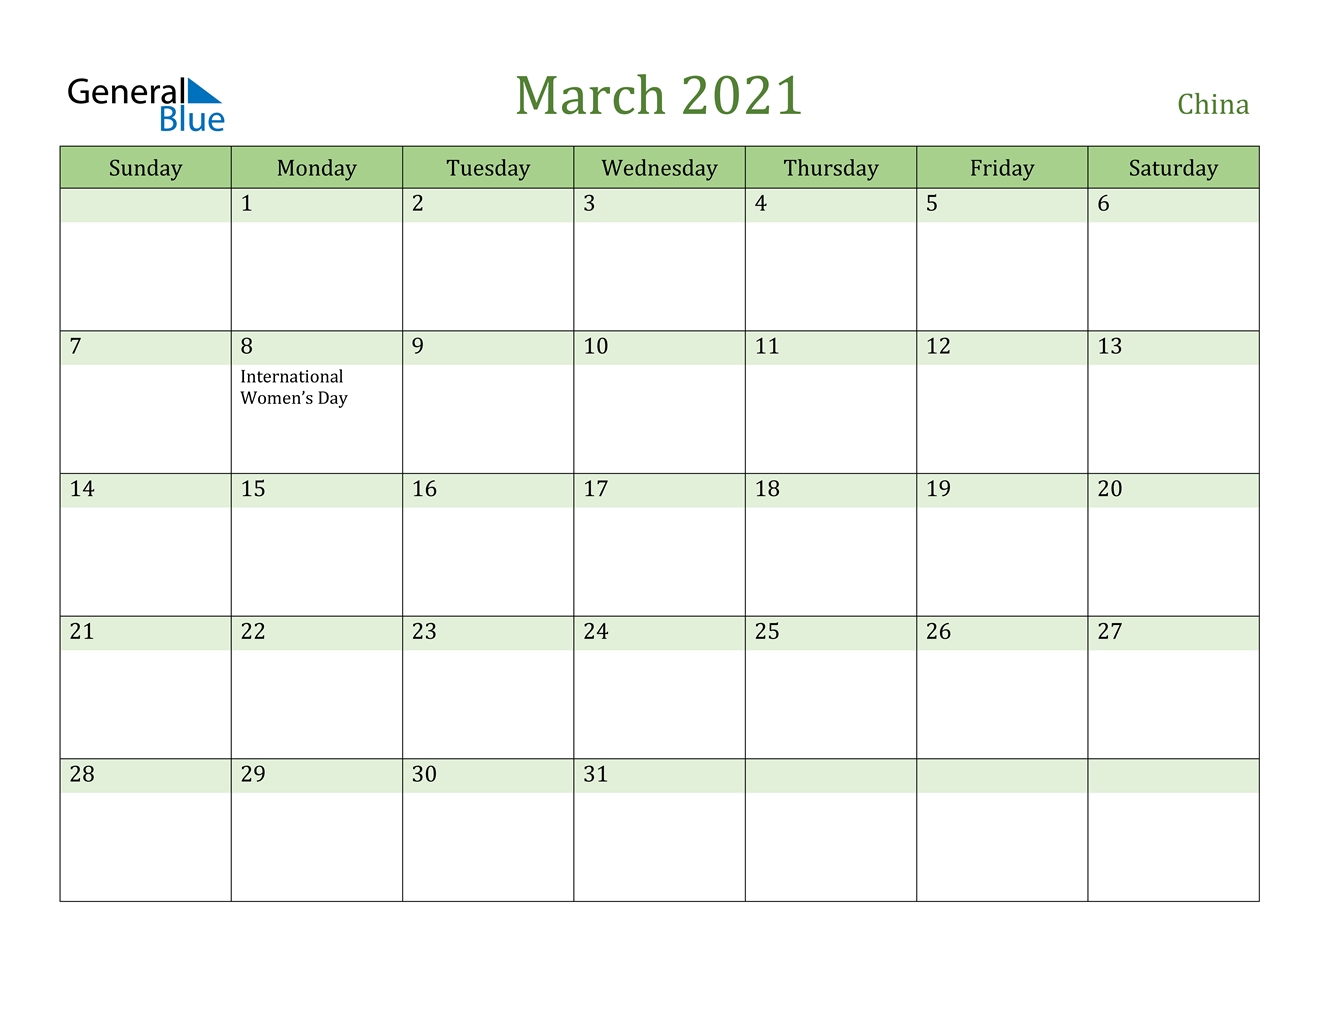 March 2021 Calendar - China